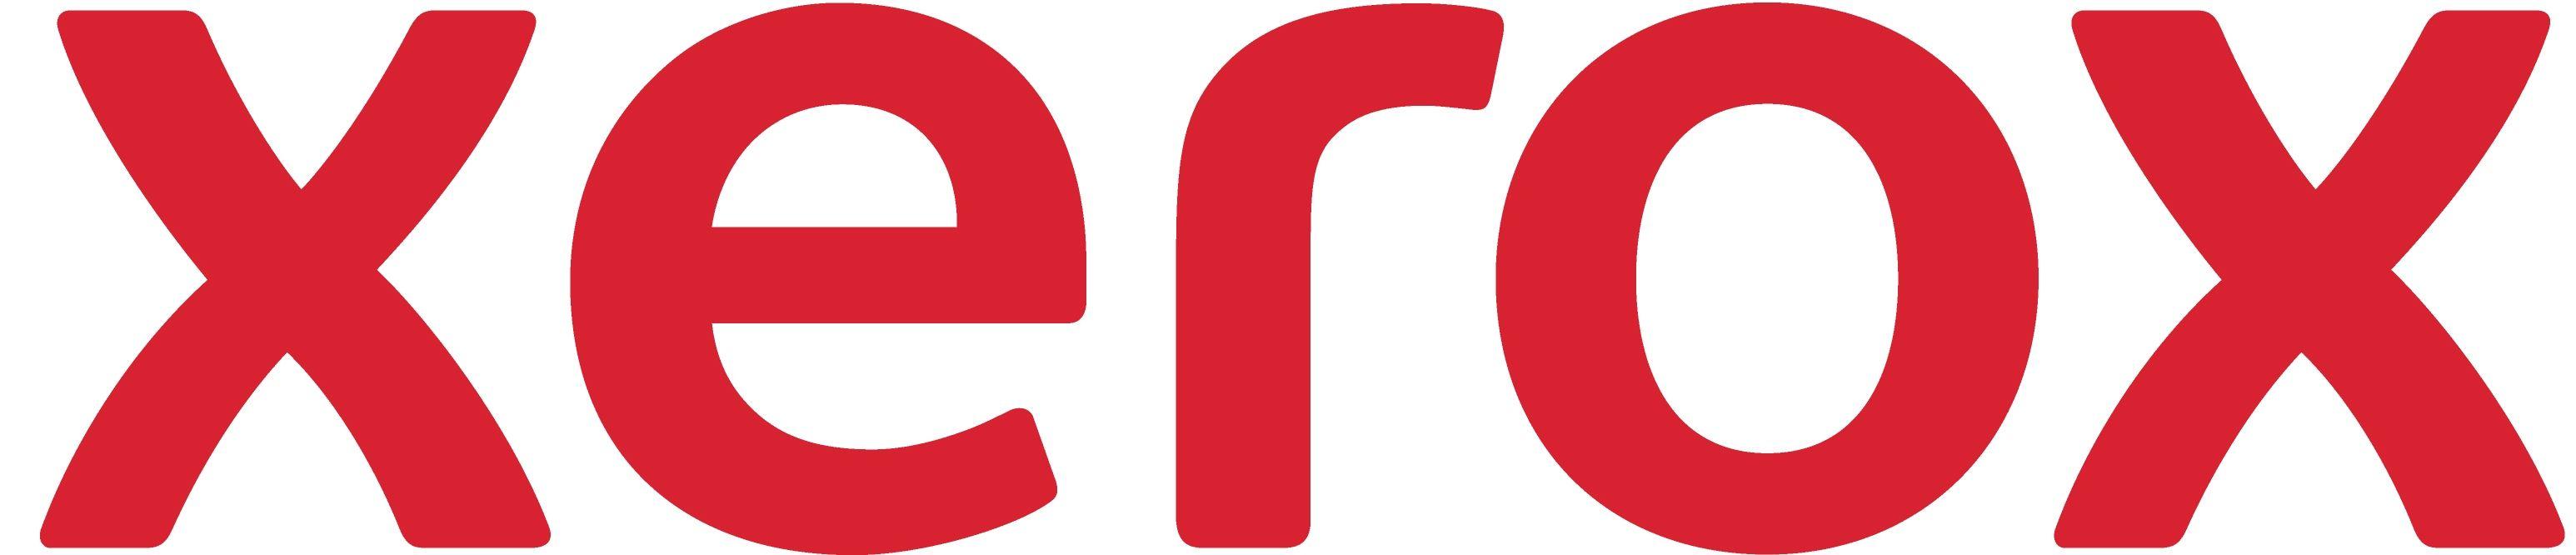 Xerox Logo - Xerox Logo Vector PNG Transparent Xerox Logo Vector.PNG Images ...